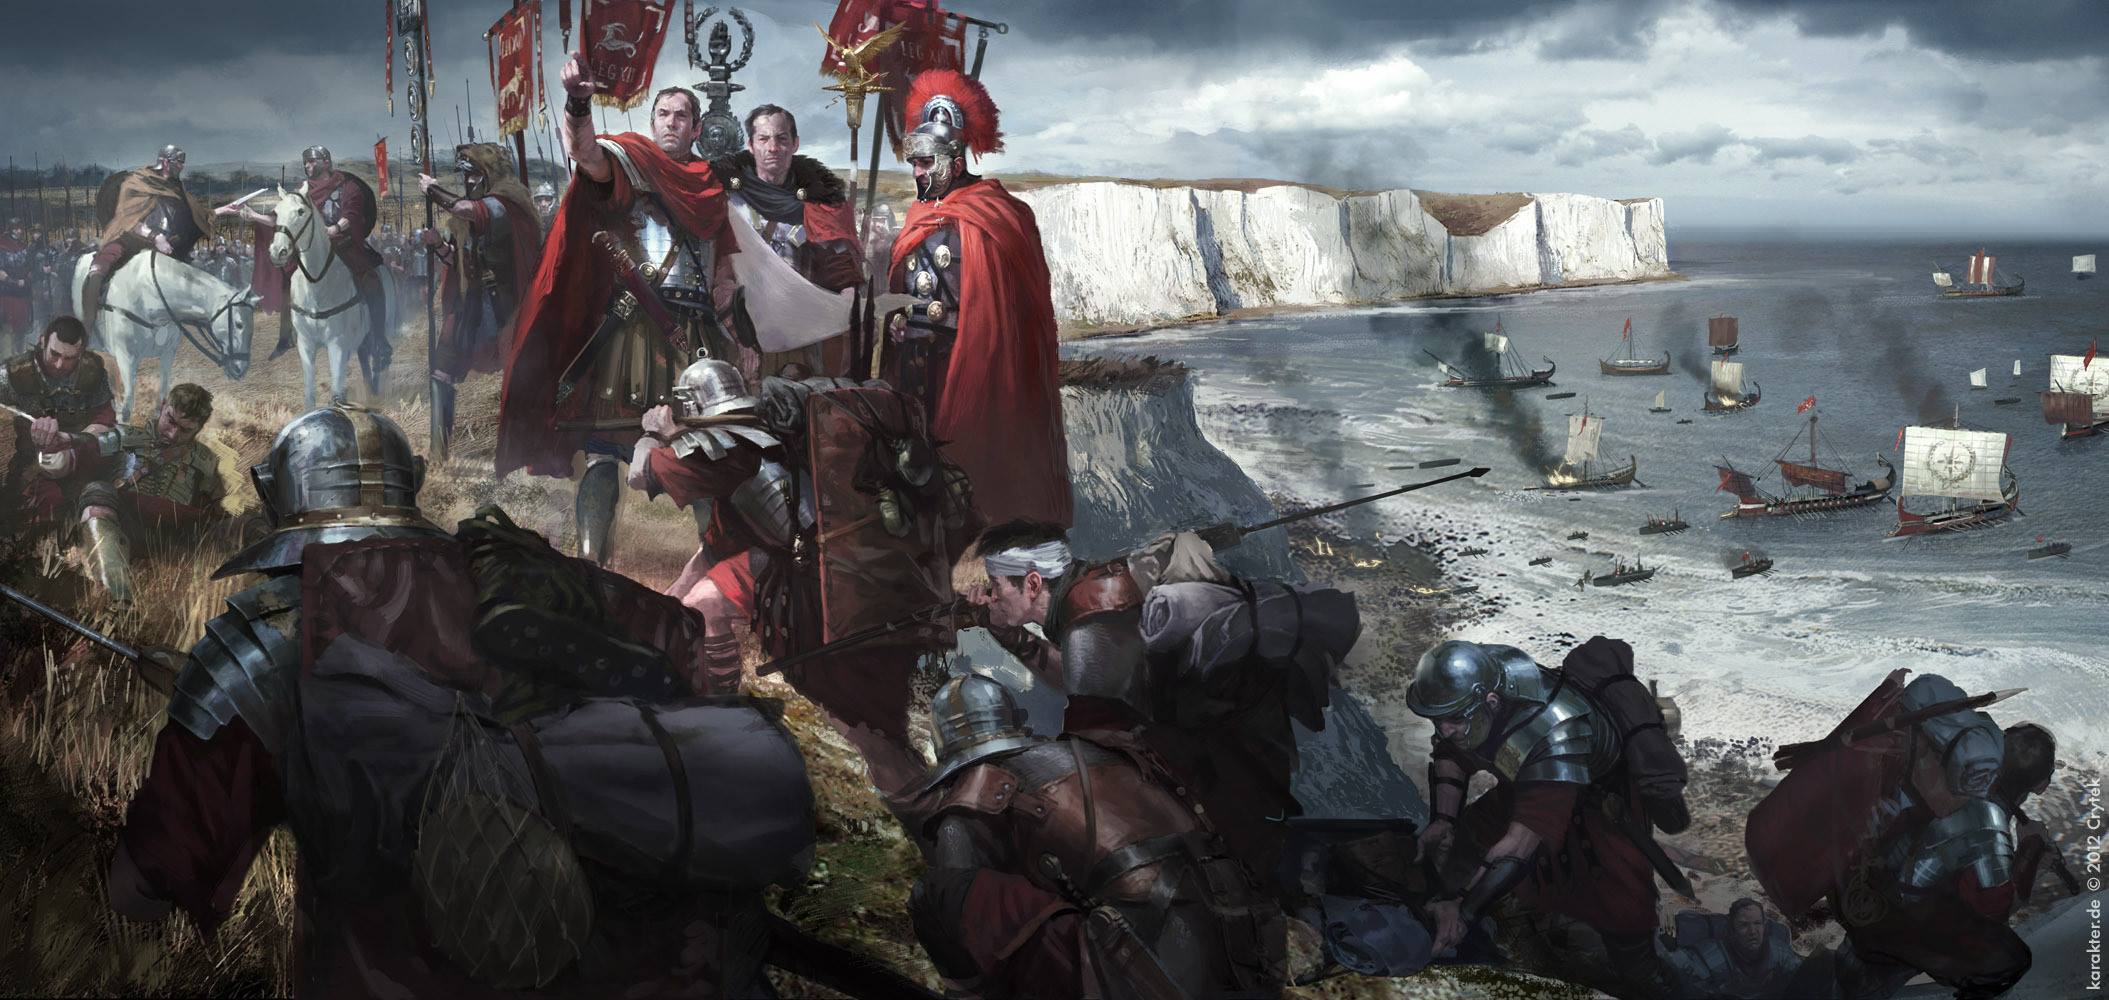 Image for PC: Roman Legion